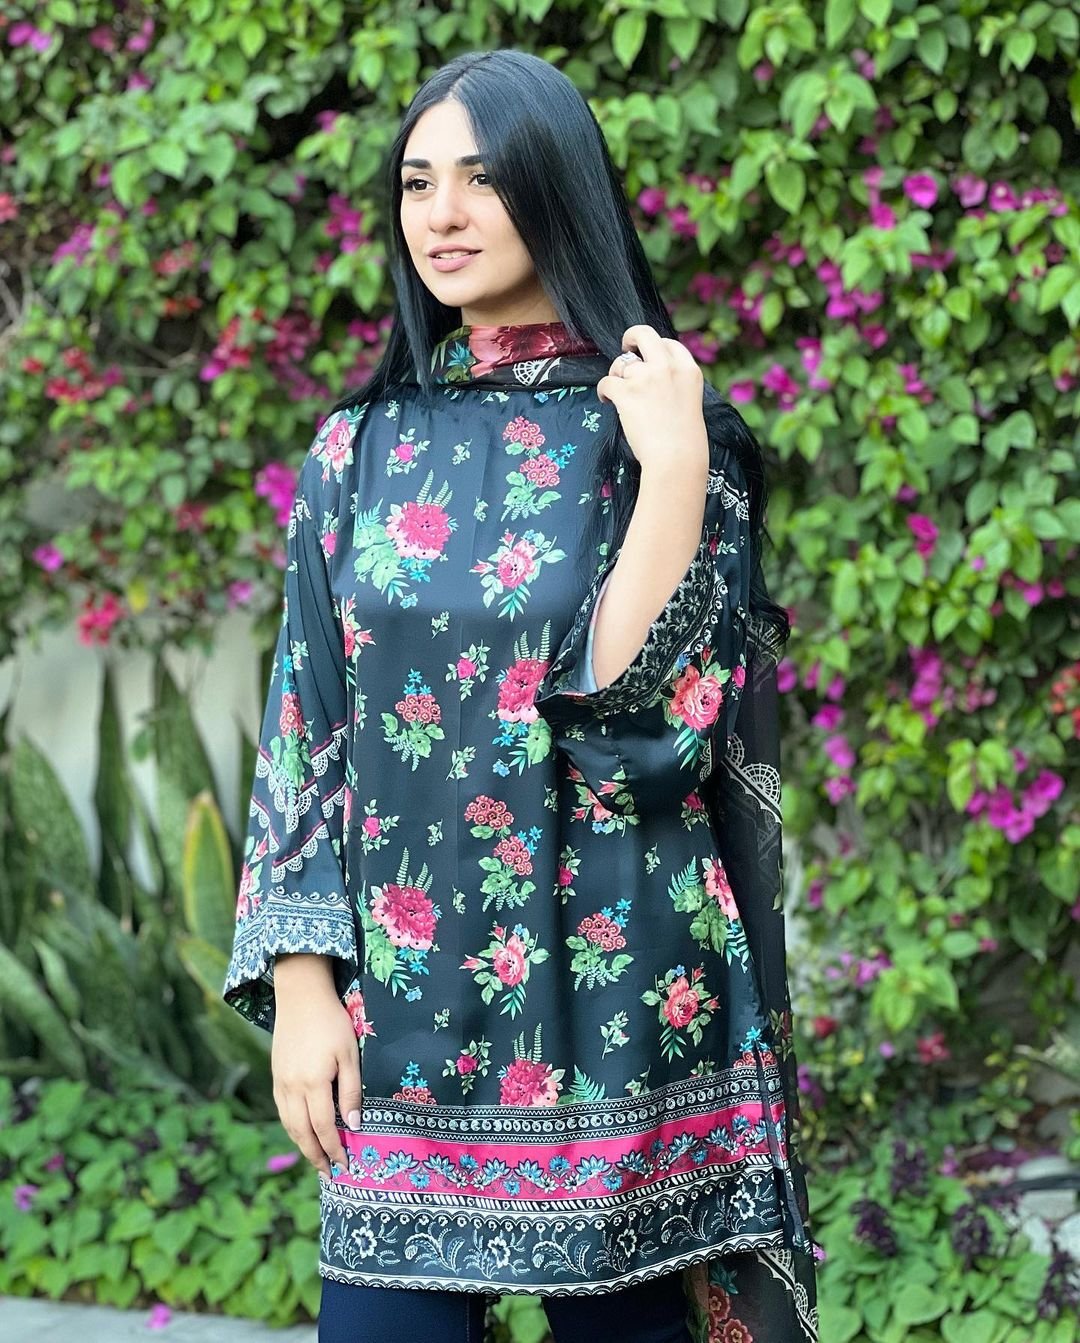 Sarah Khan Twins in Floral Attire